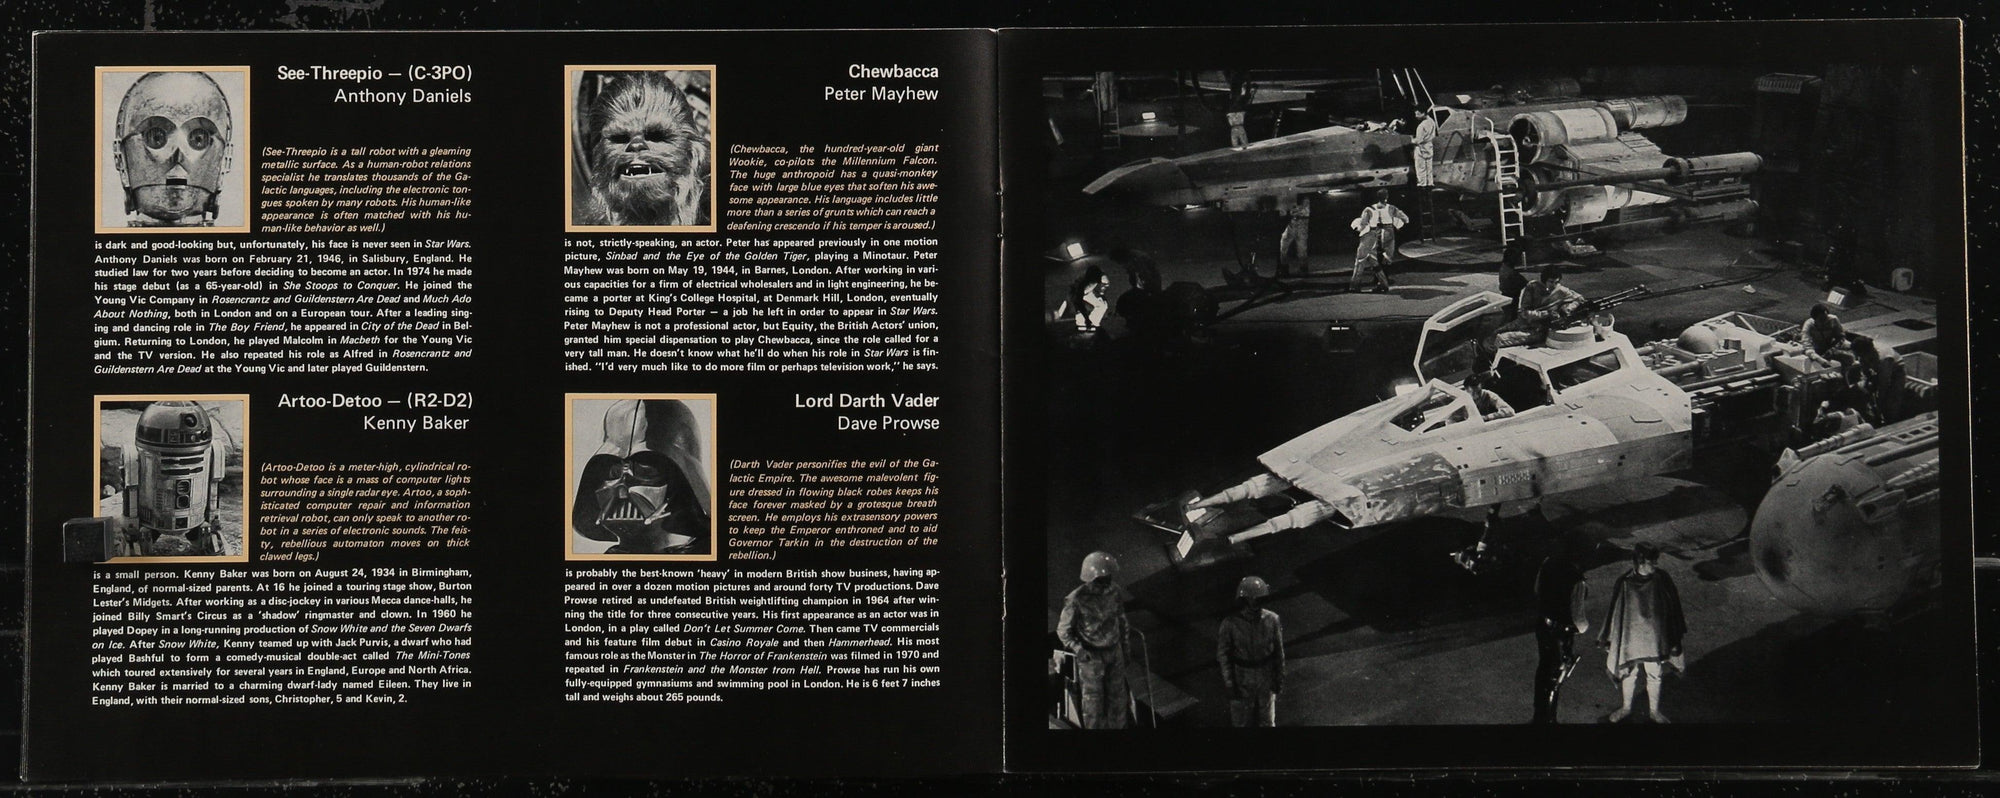 Star Wars Program Original Vintage Movie Poster